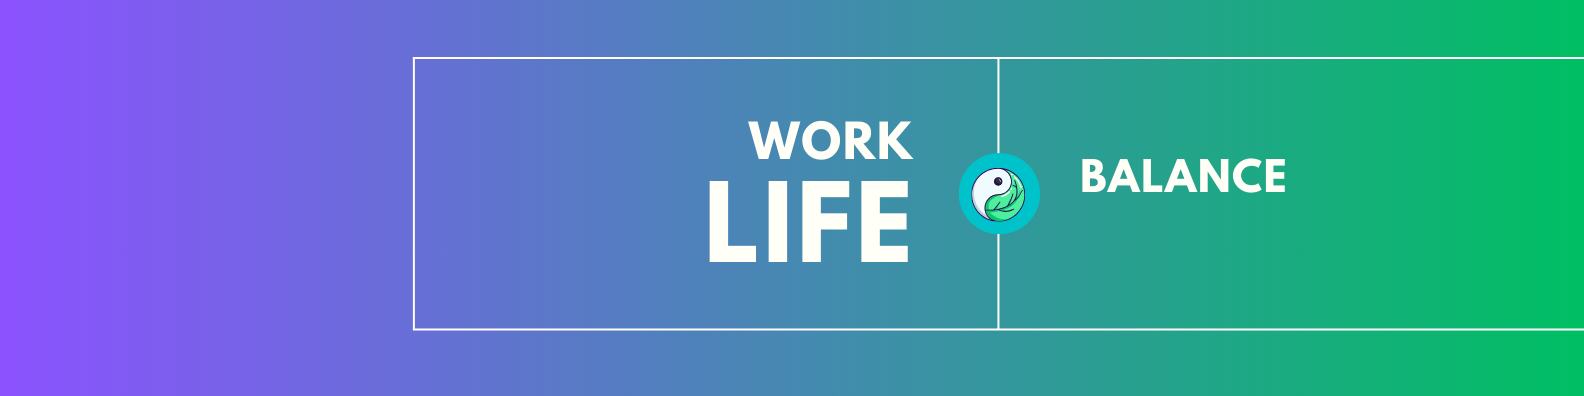 work-life balance for employee appreciation 